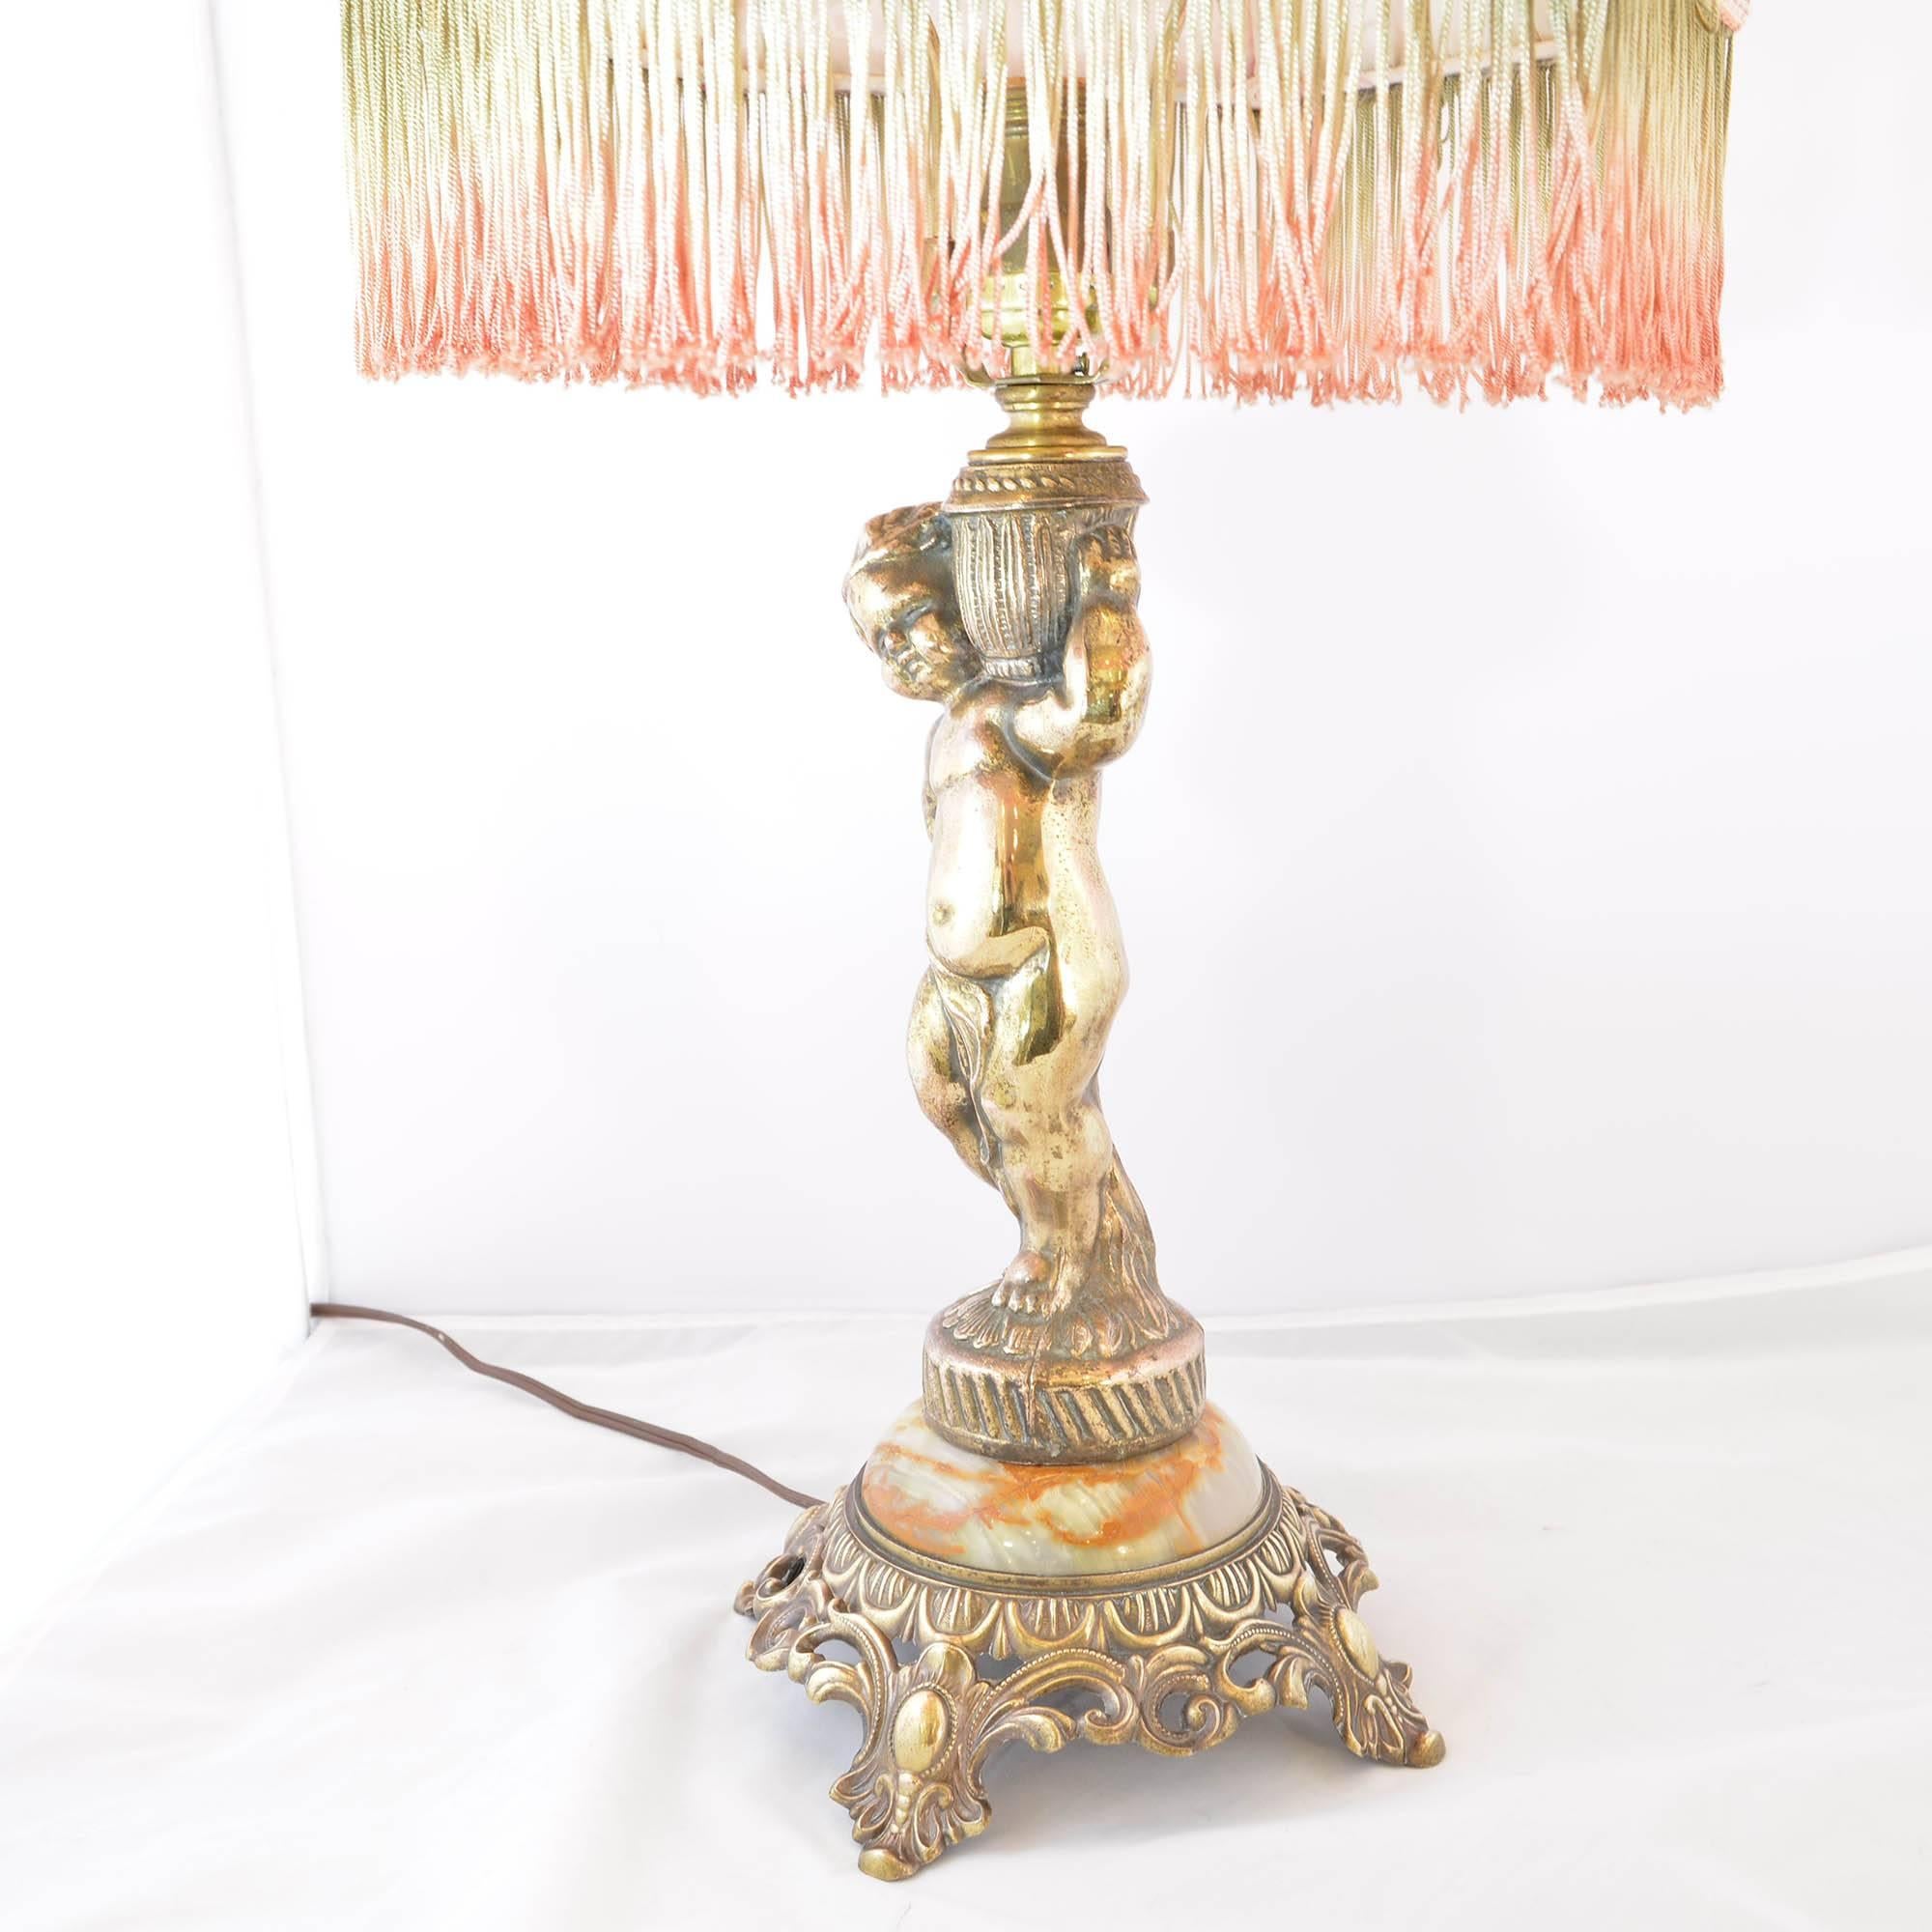 20th Century Boudoir Lamp Gold Cherub with Rosette and Fringe Shade